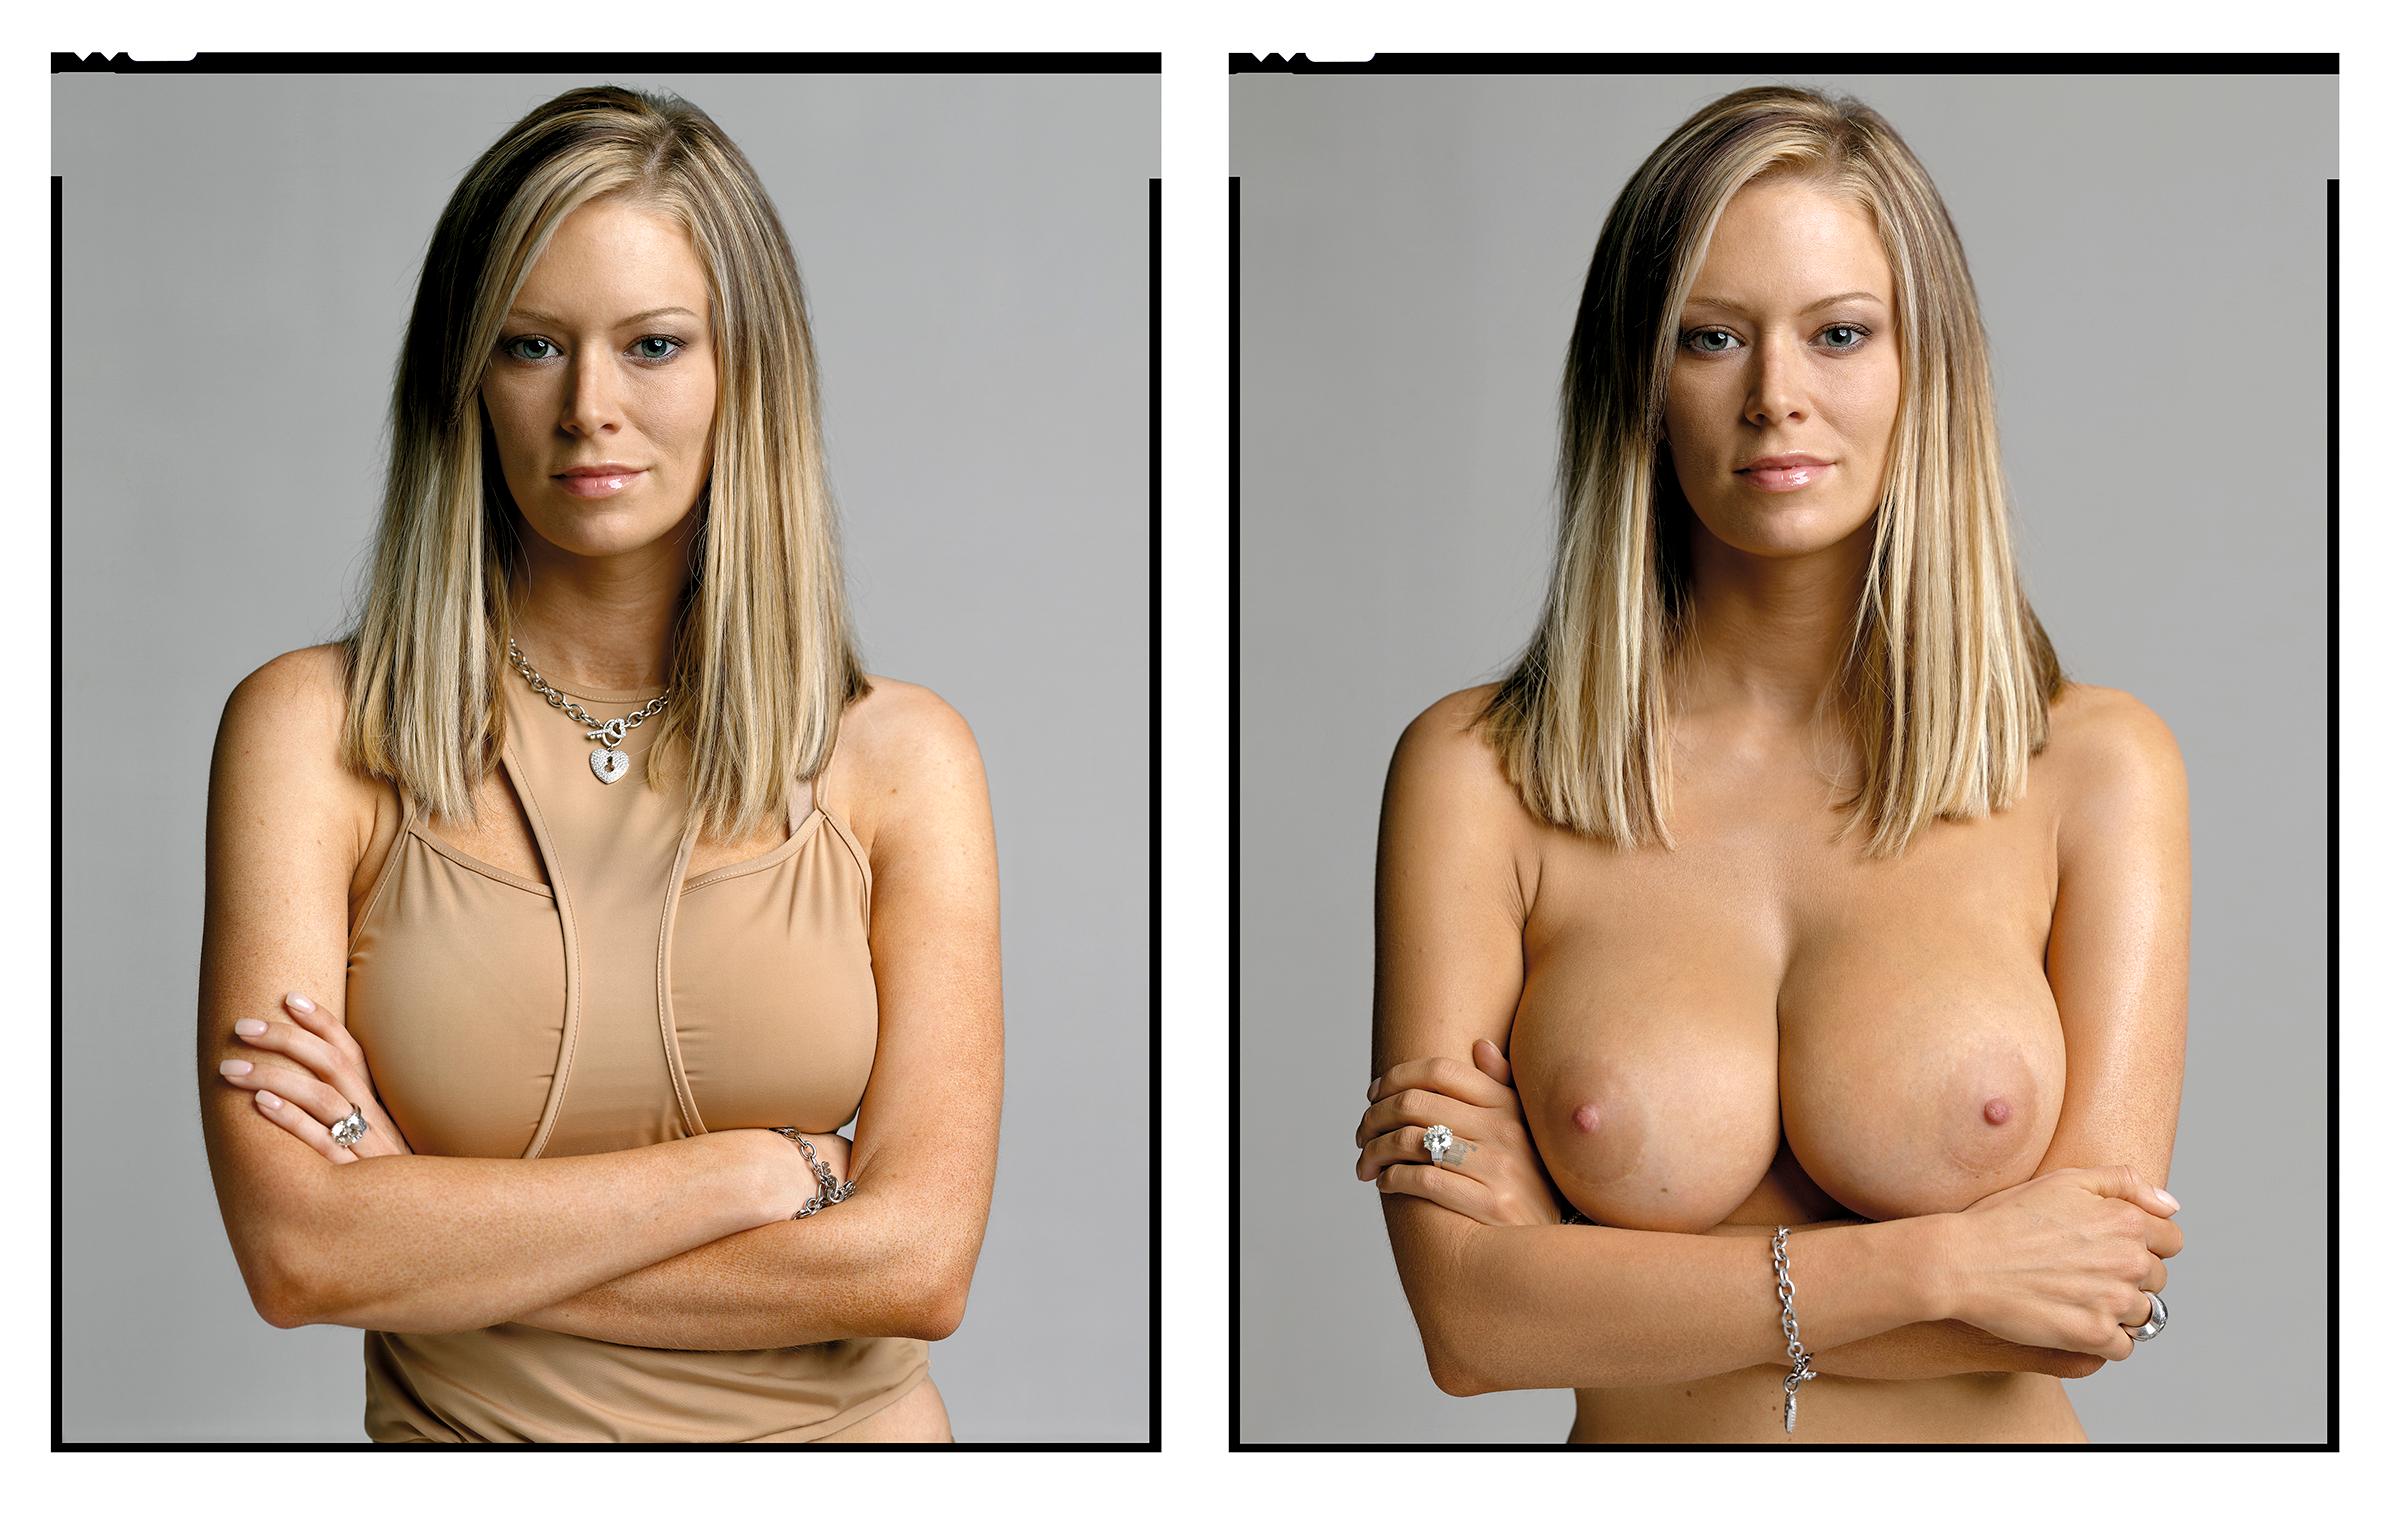 Jenna Monroe nude photos